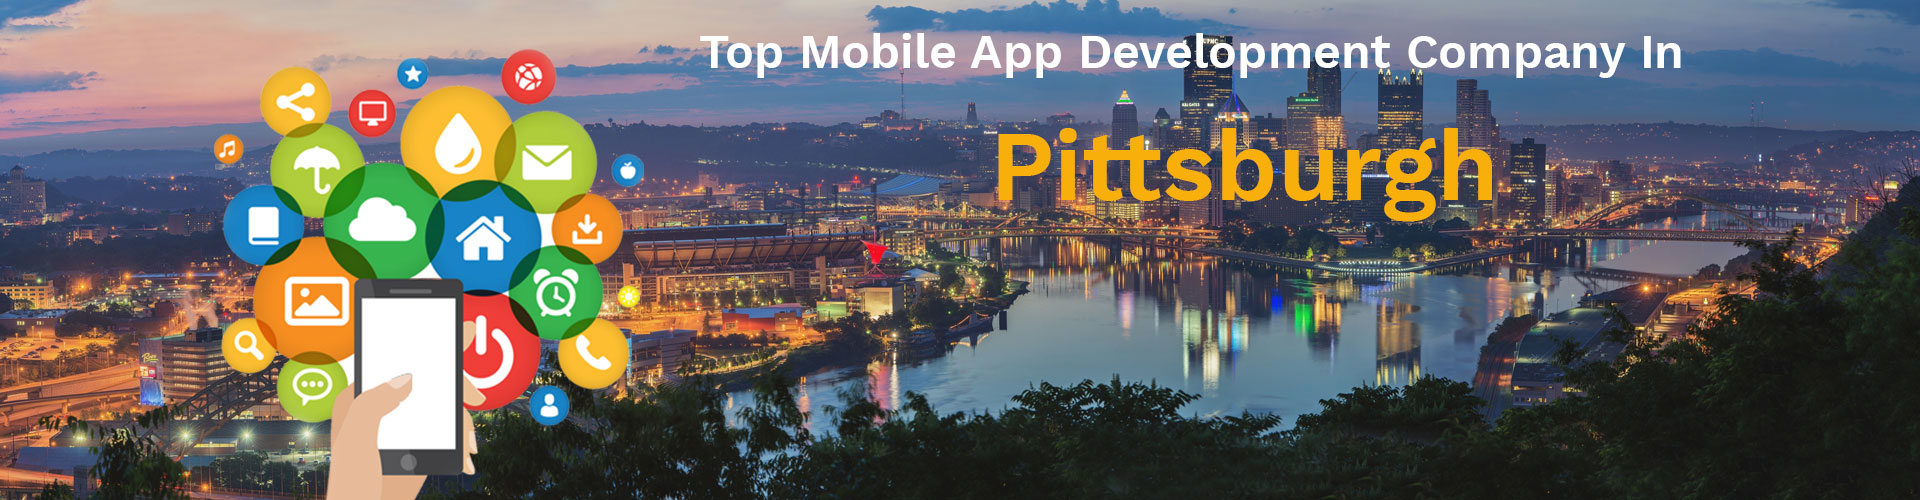 mobile app development company pittsburgh